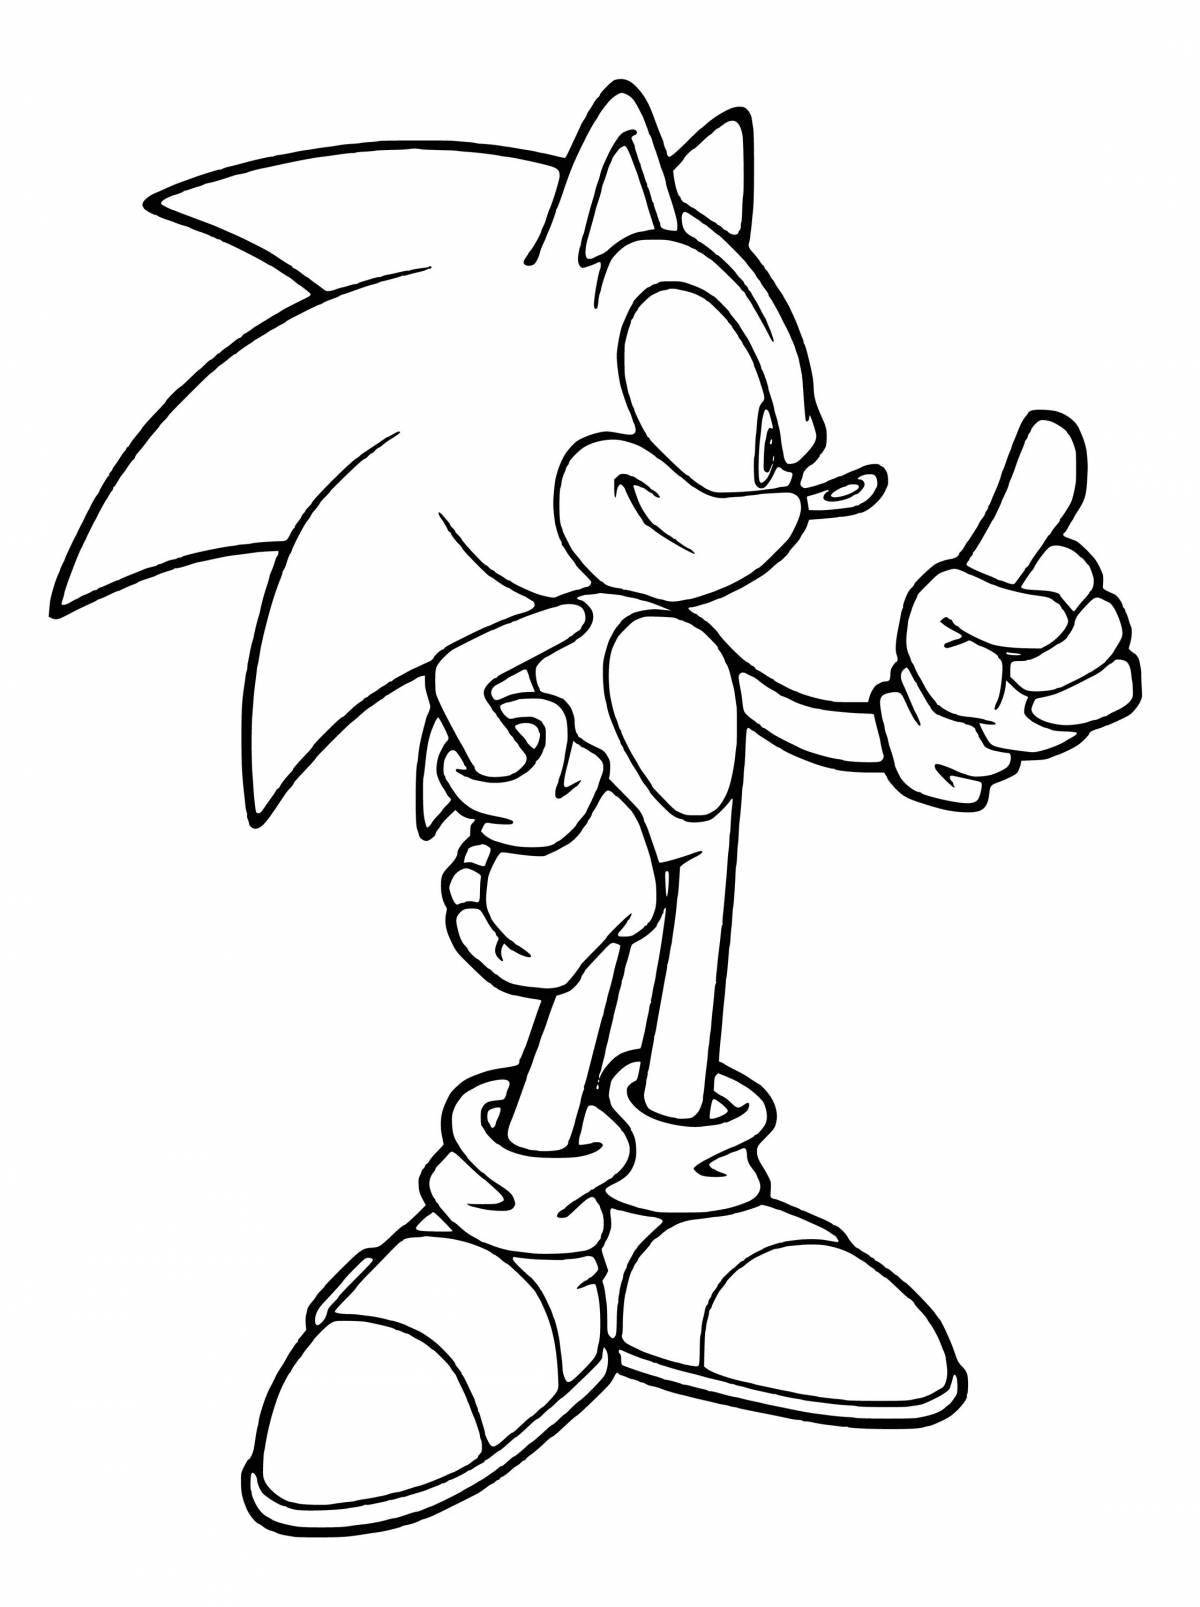 Fun super hedgehog sonic coloring page